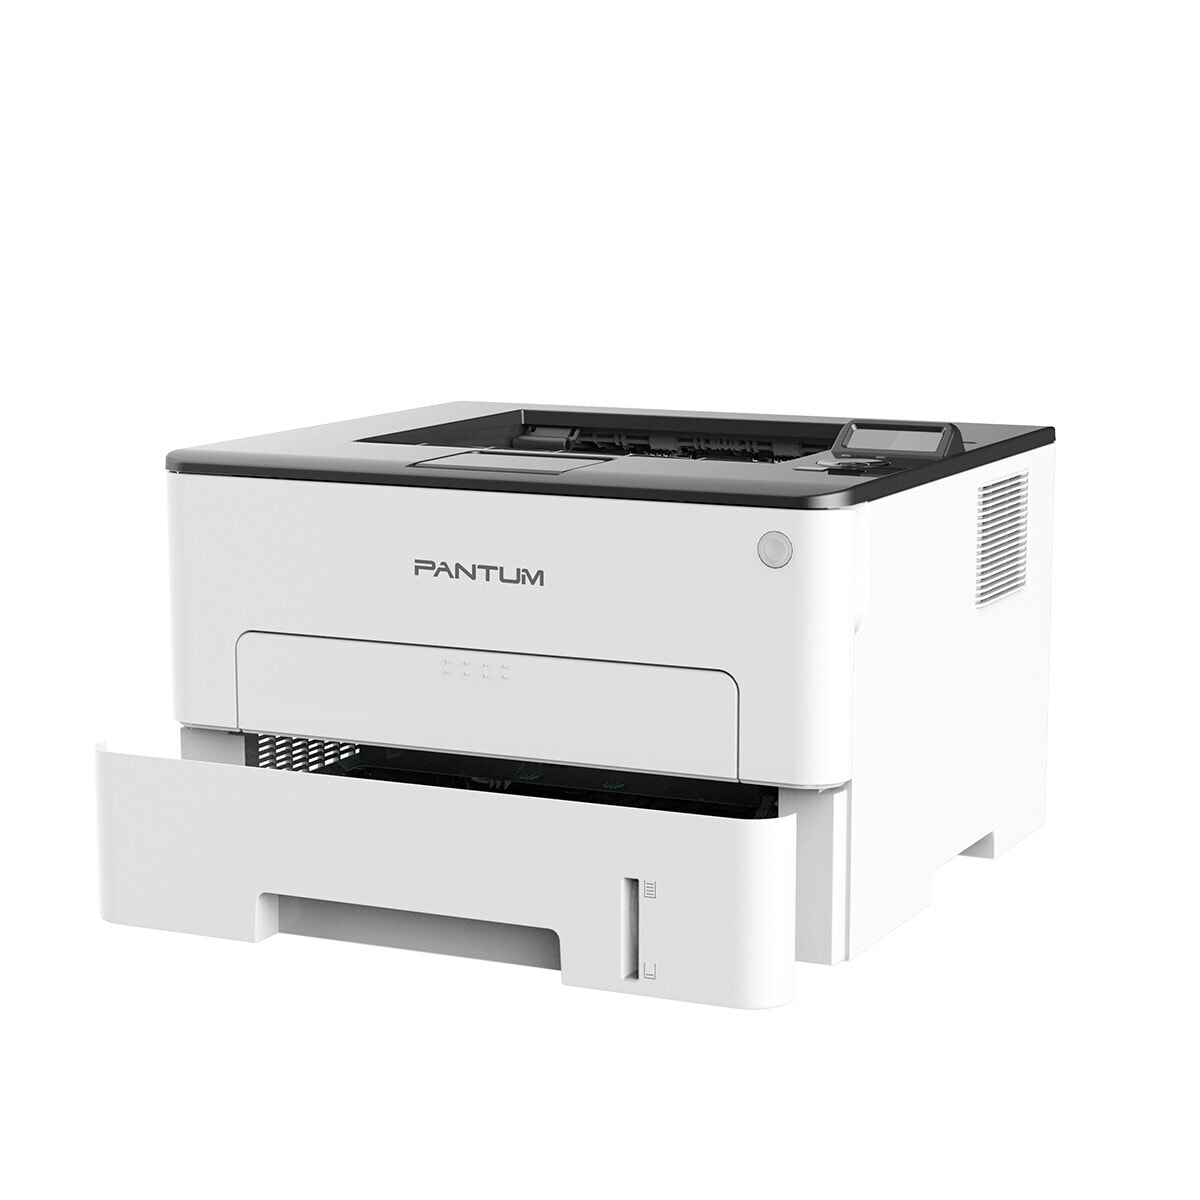 Pantum P3305DW - Laser - A4 - 35 ppm - Duplex printing - White